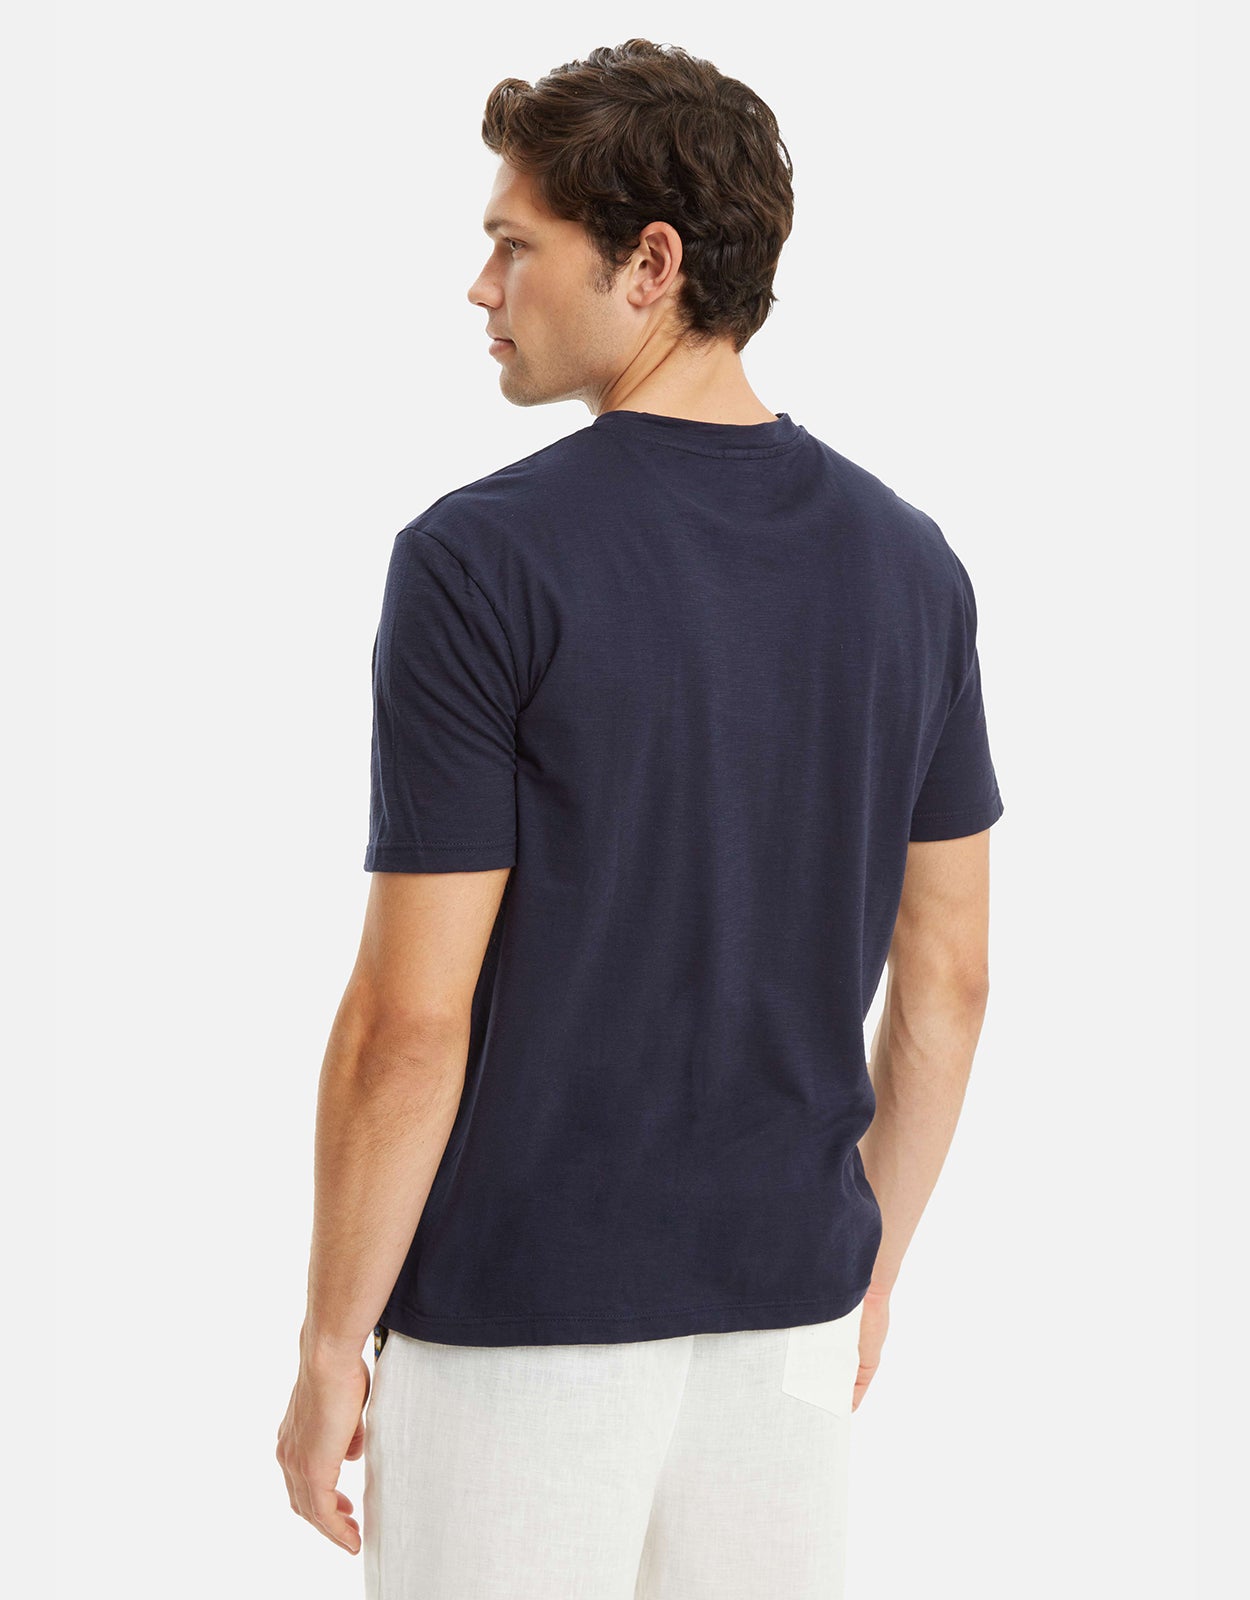 Stromboli Linen and Cotton T-Shirt